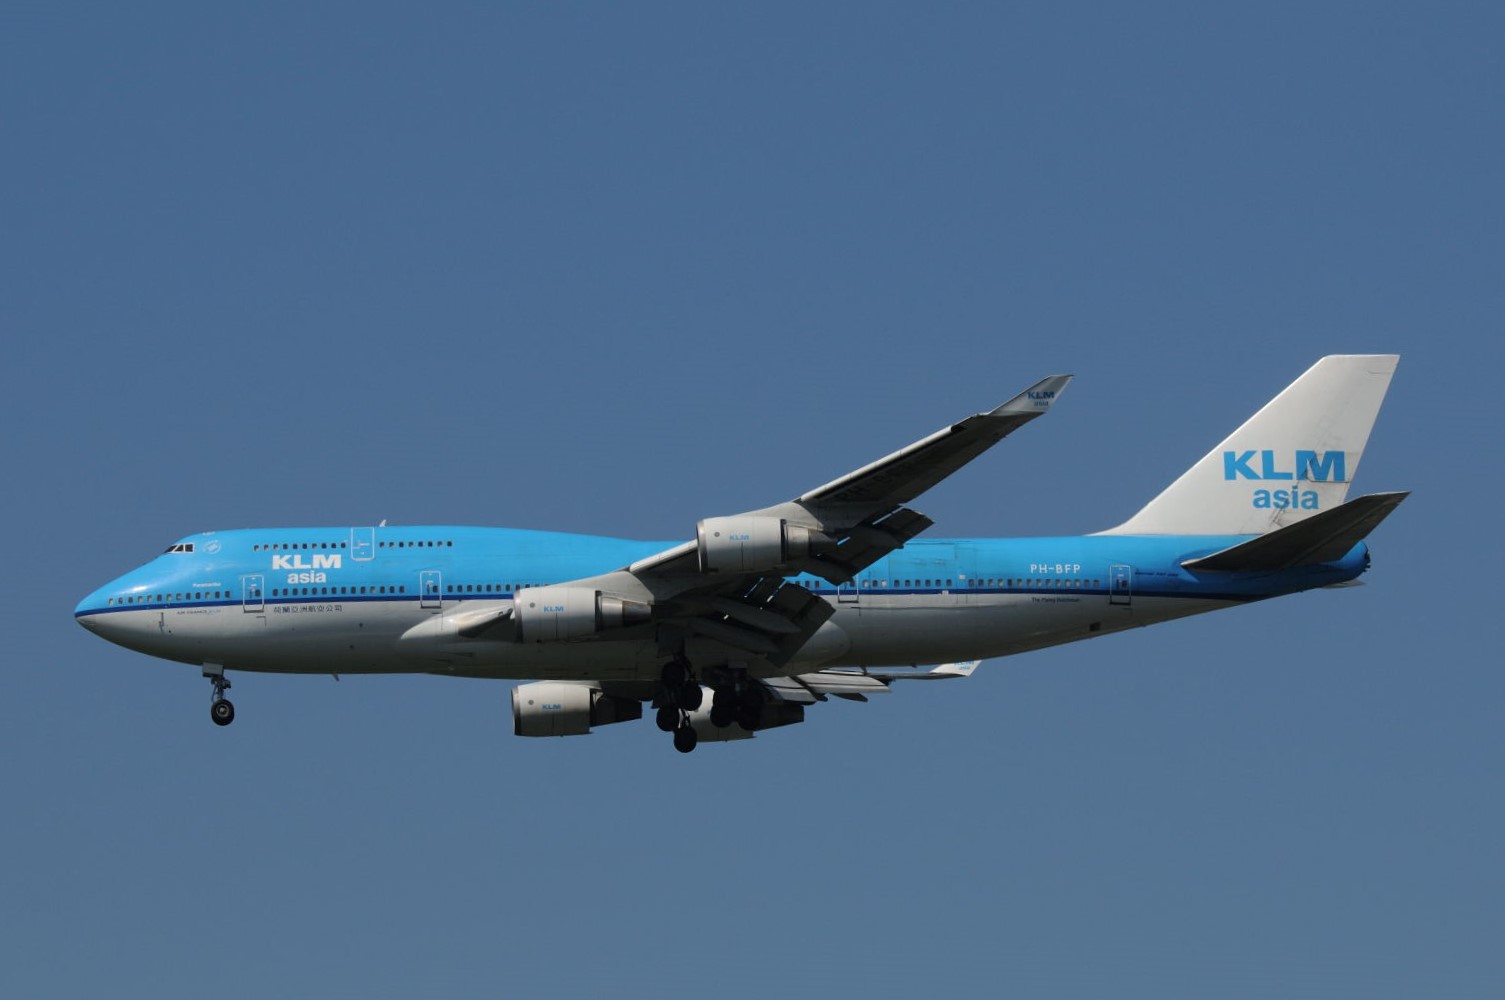 KLMとKLM asia。